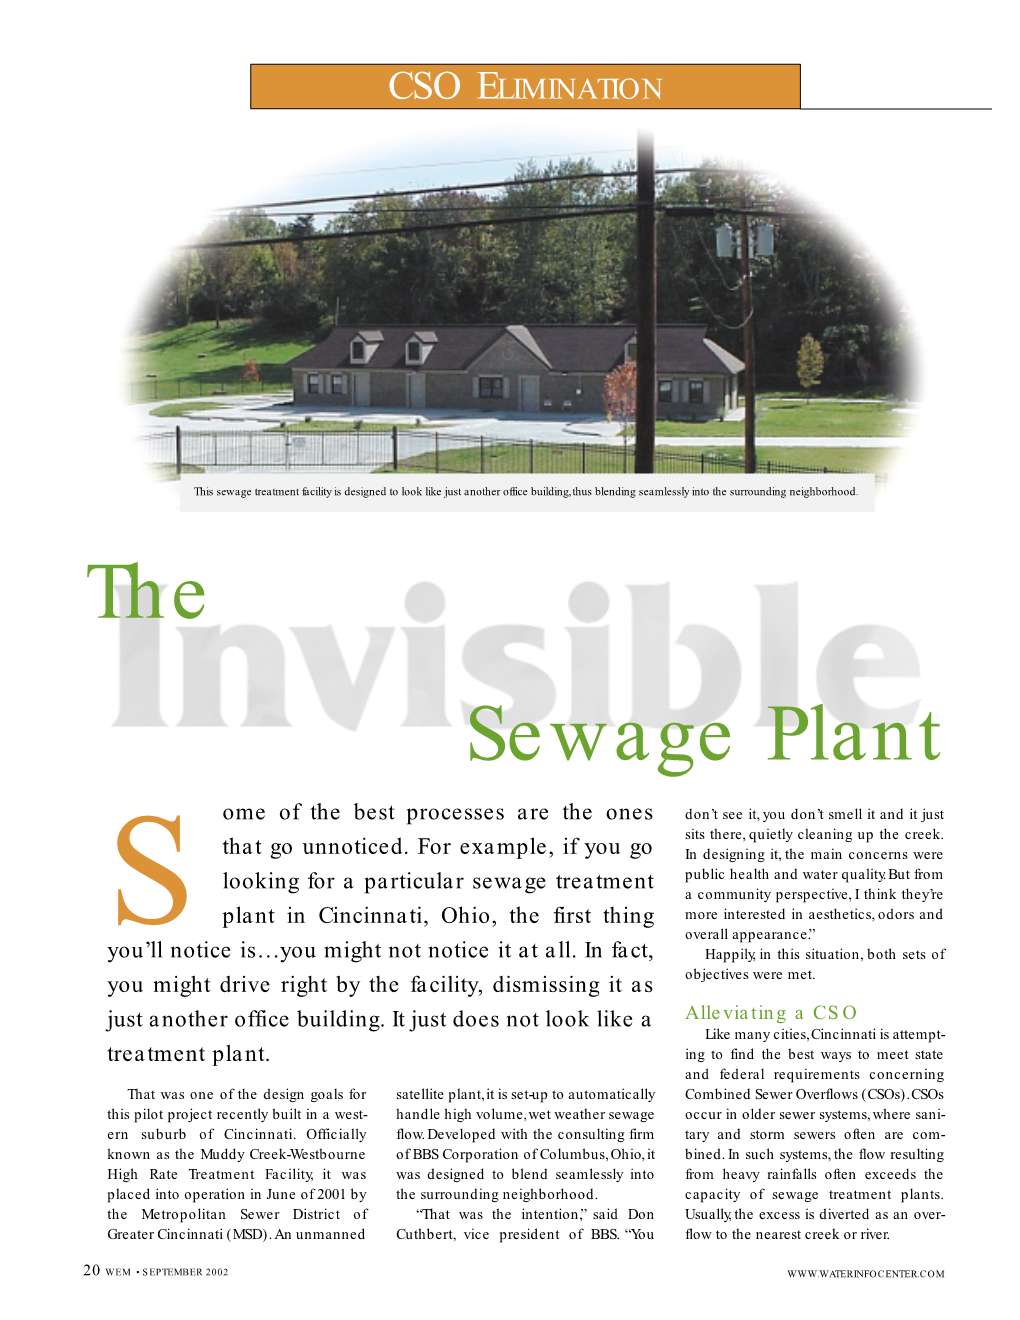 The Sewage Plant